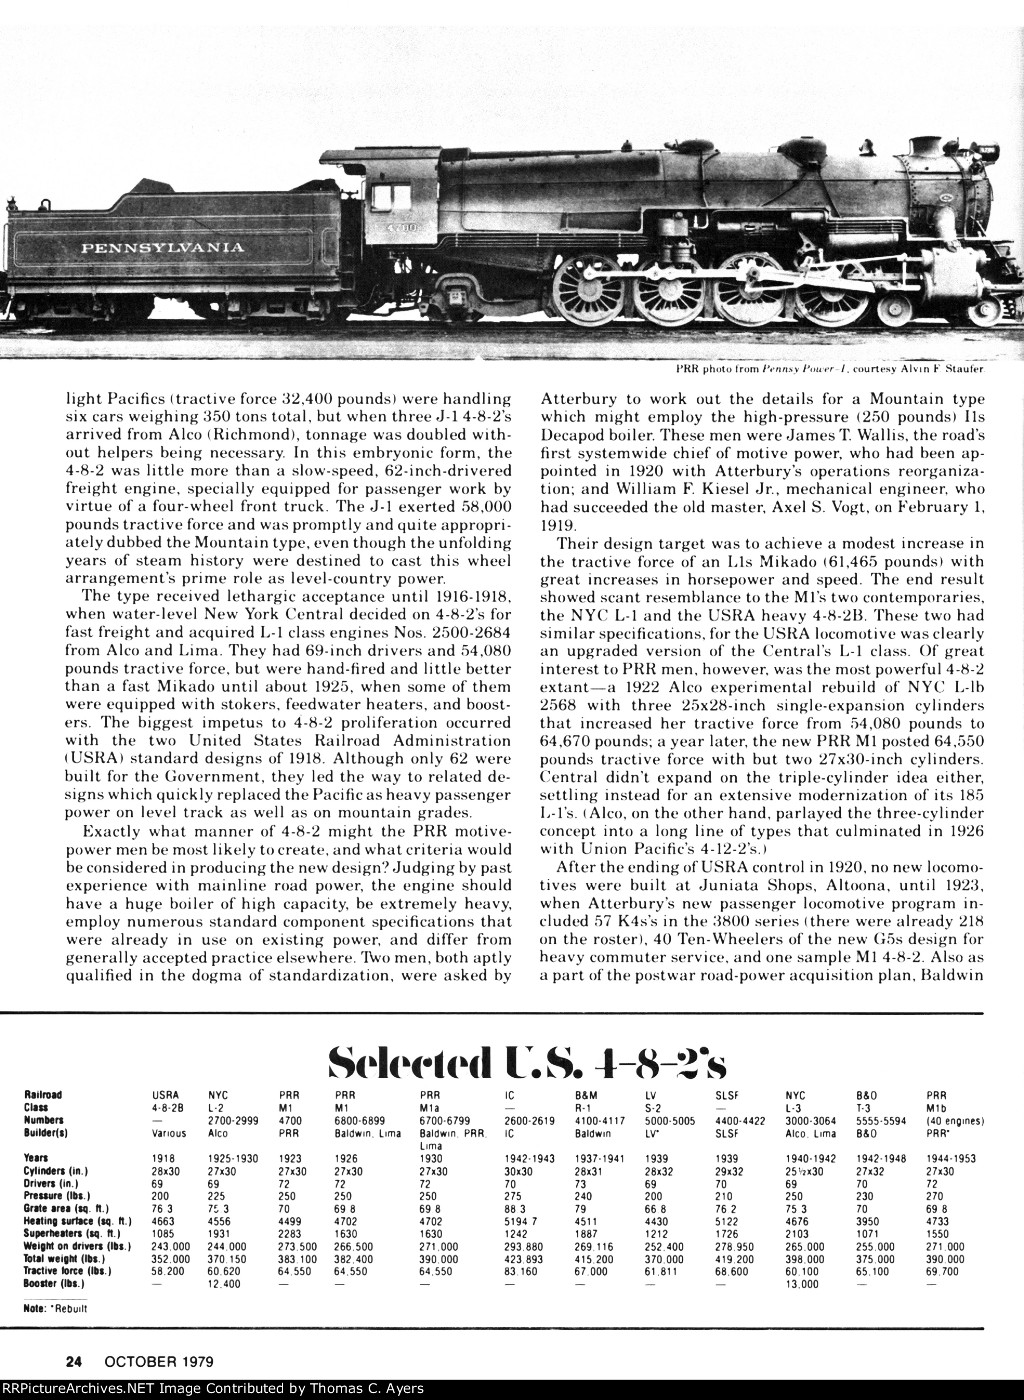 Atterbury's M-1 Engines, Page 24, 1979